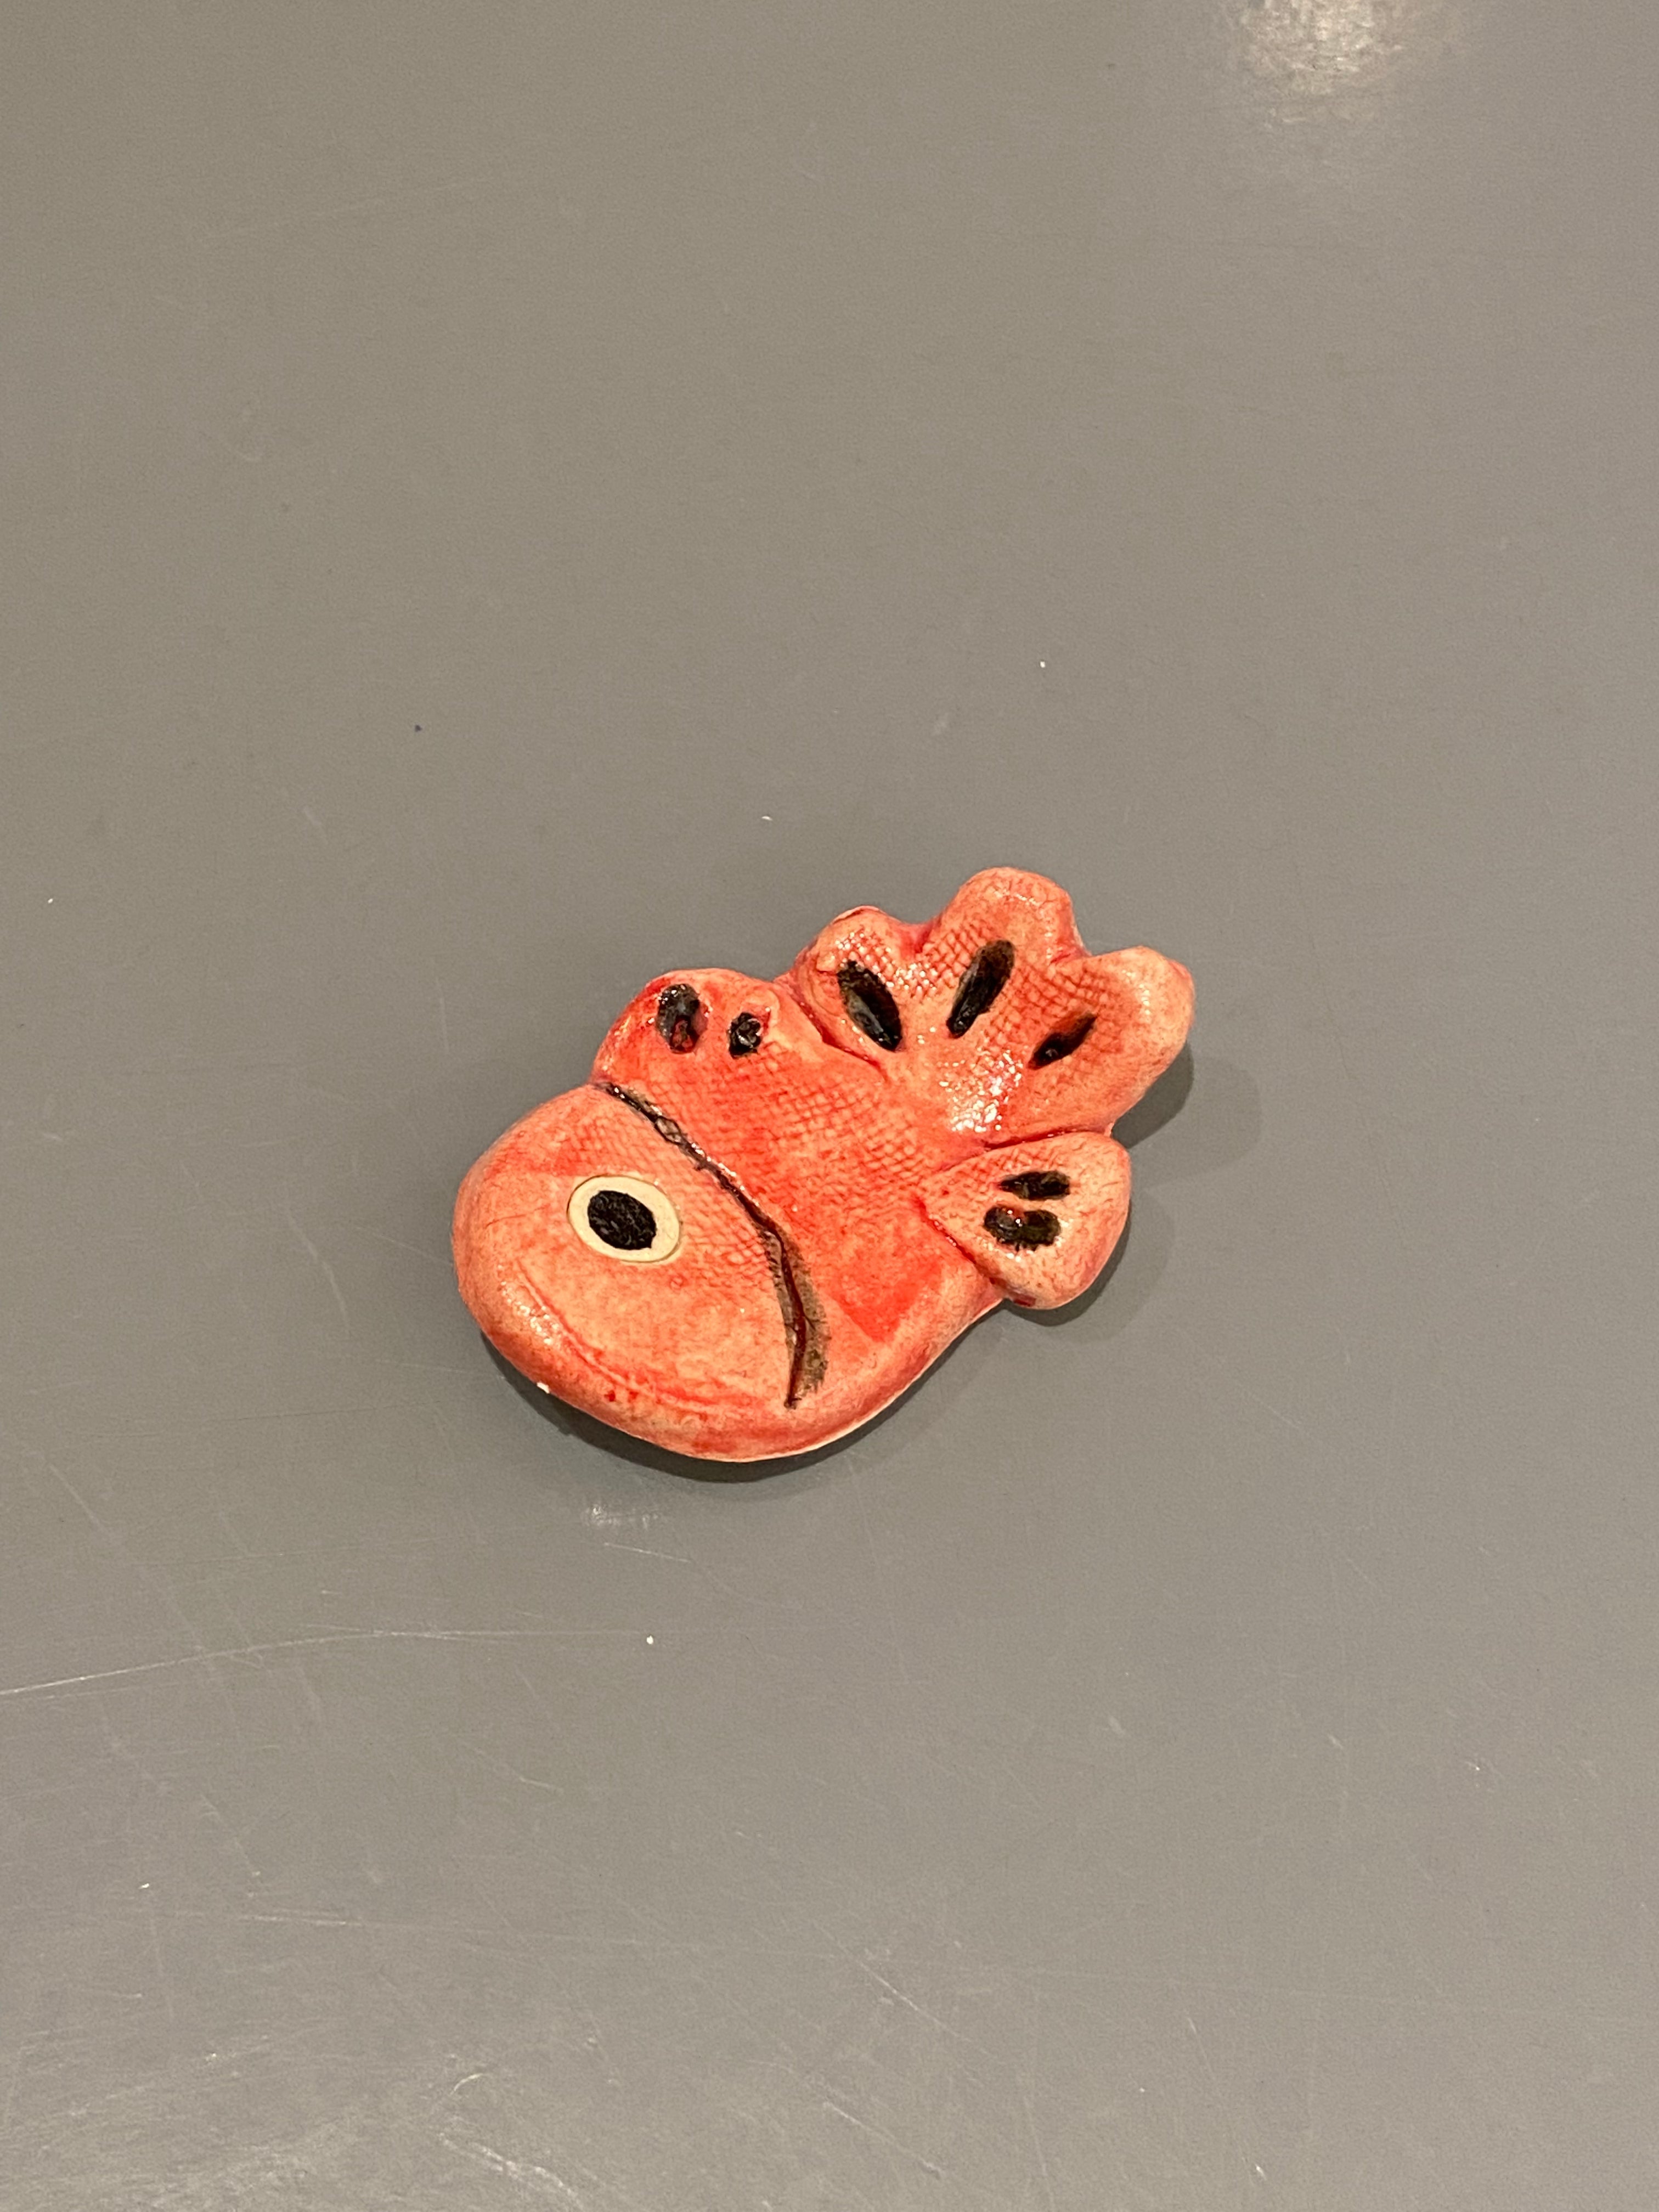 Ceramic chopstick holder - Fish